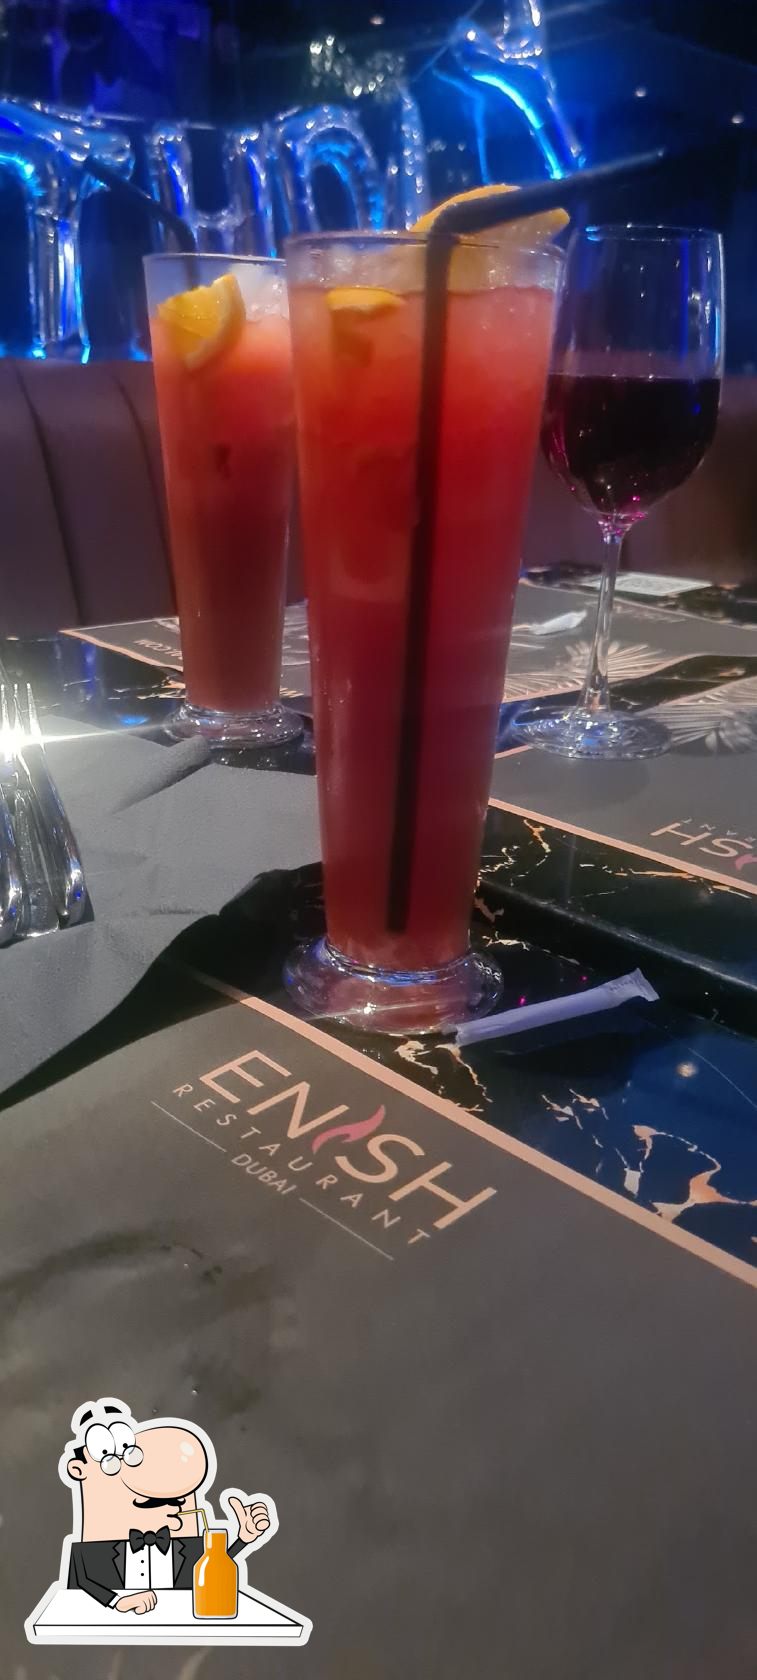 Garnished Stockfish - Picture of Enish Nigerian Restaurant & Lounge Dubai -  Tripadvisor